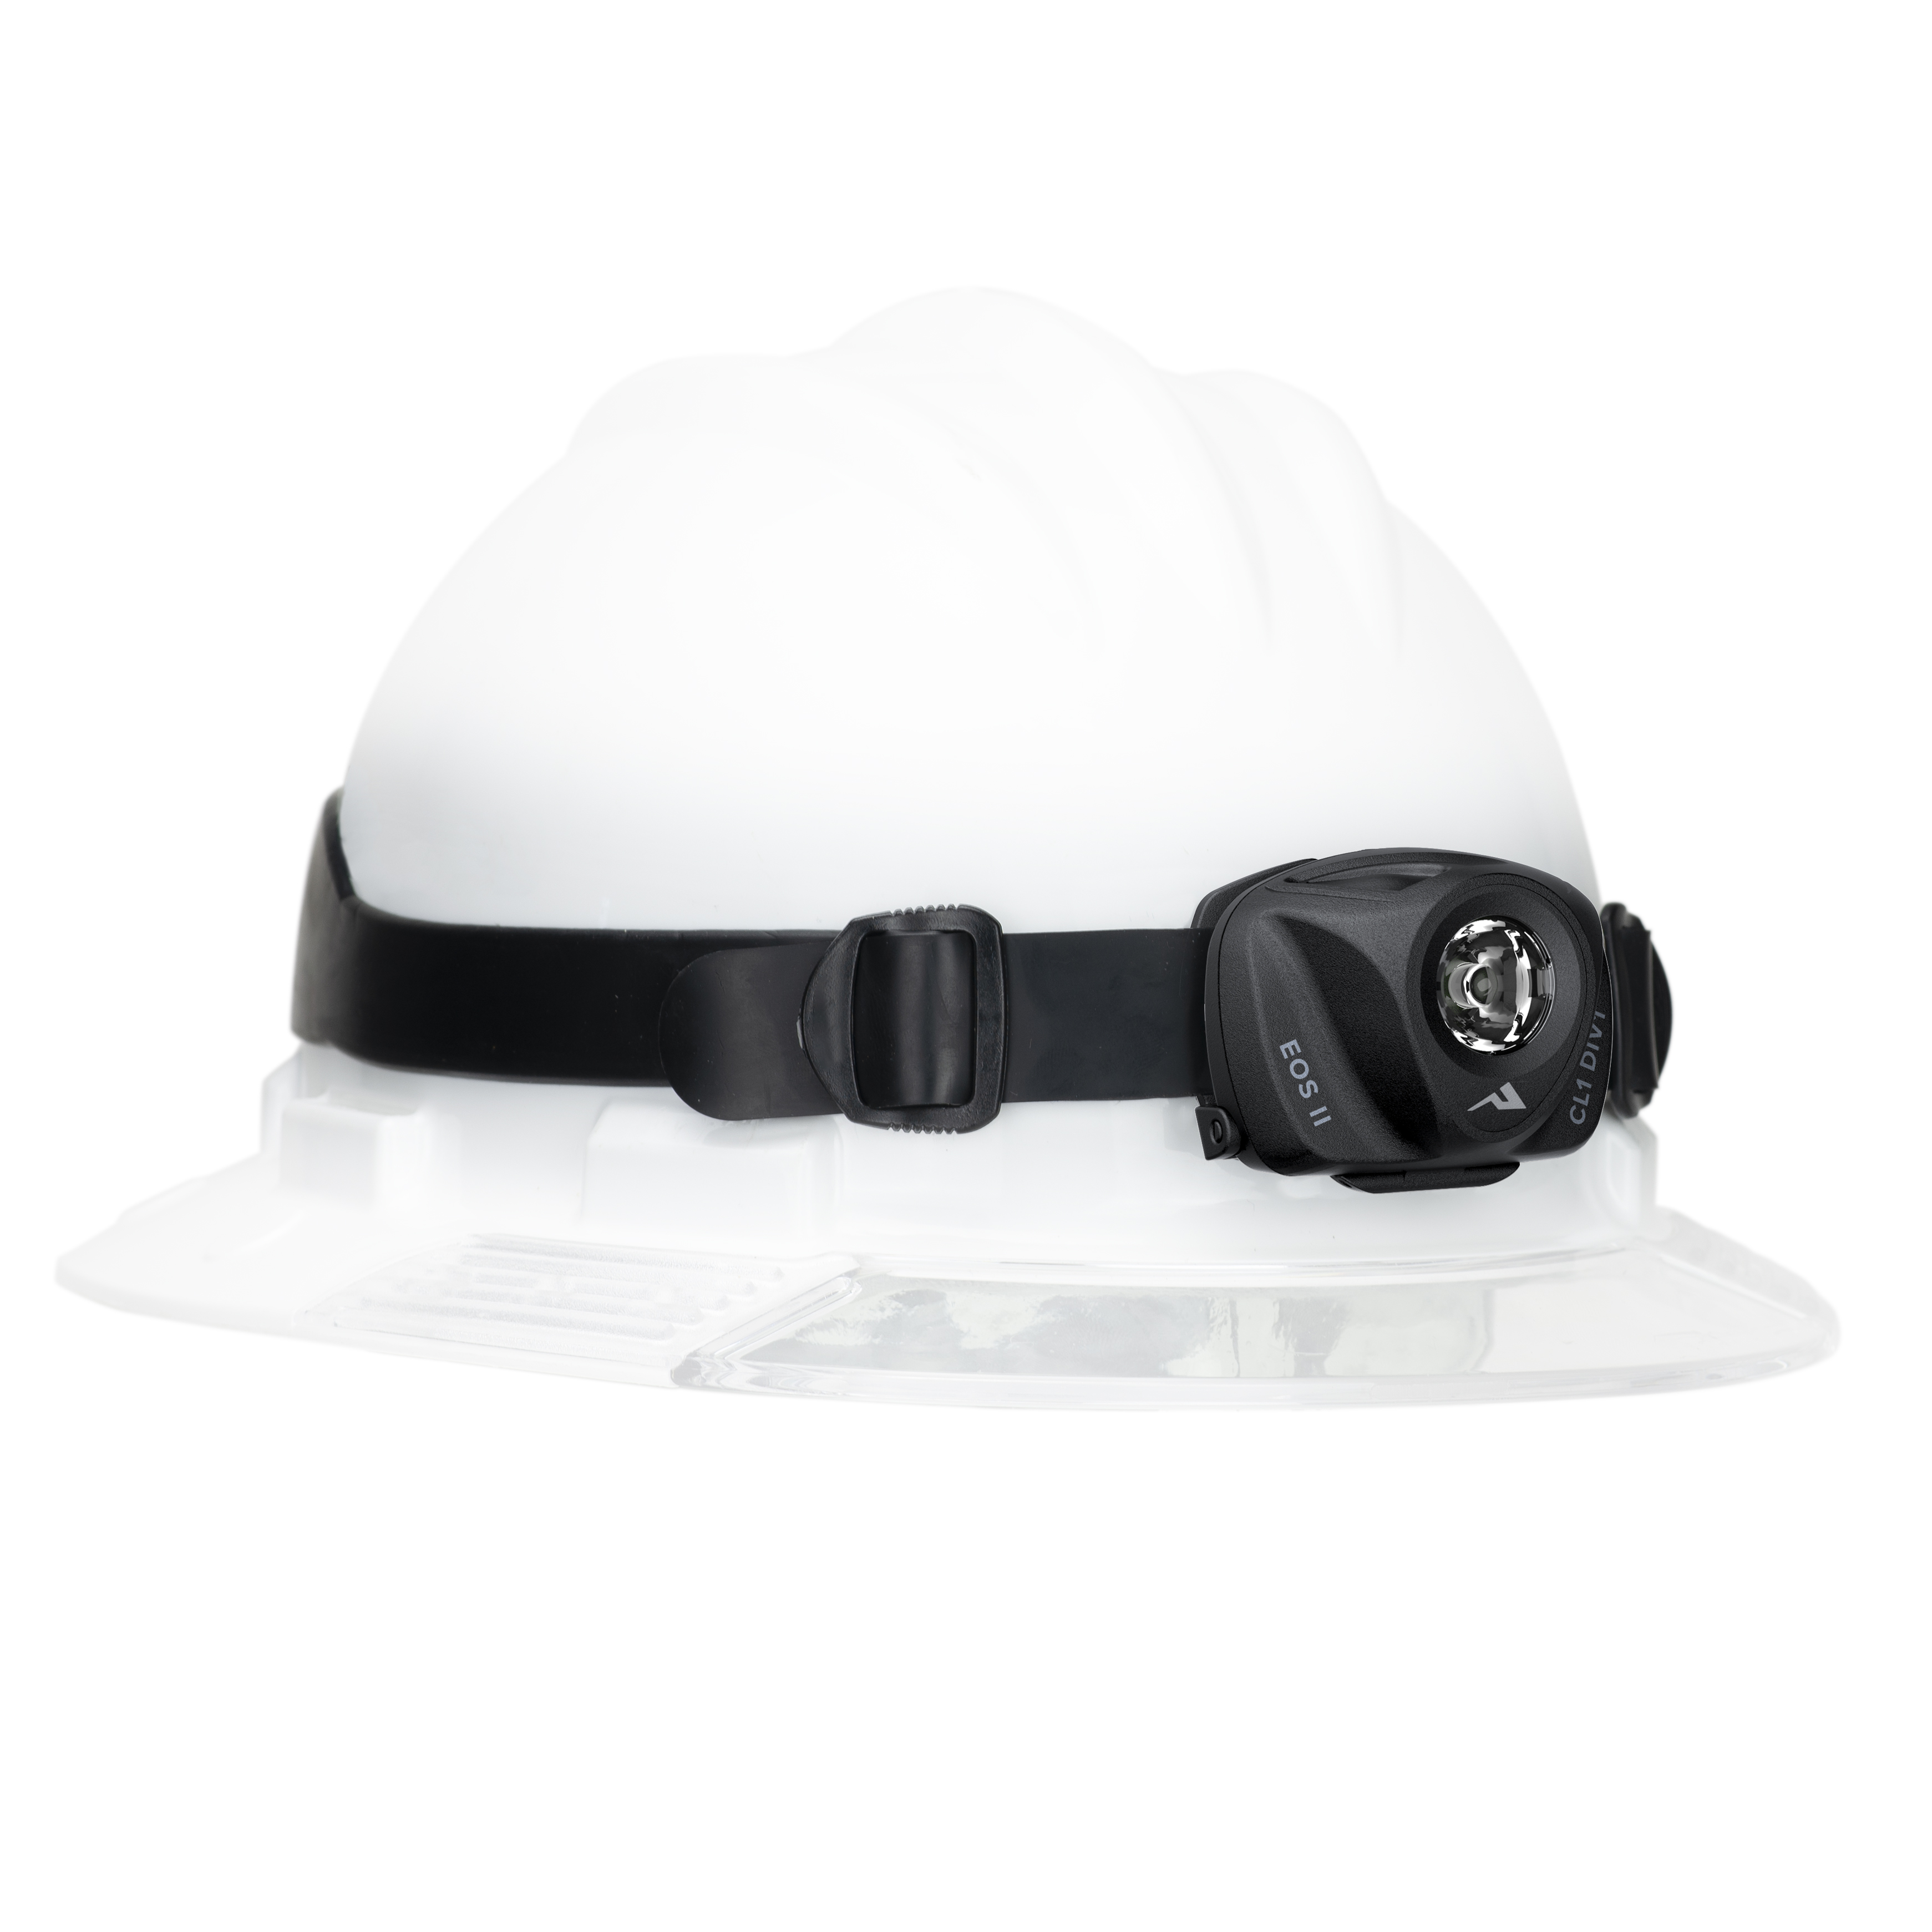 LIGHT,HARD HAT,INTRINSICALLY - Intrinsically Safe Headlamps